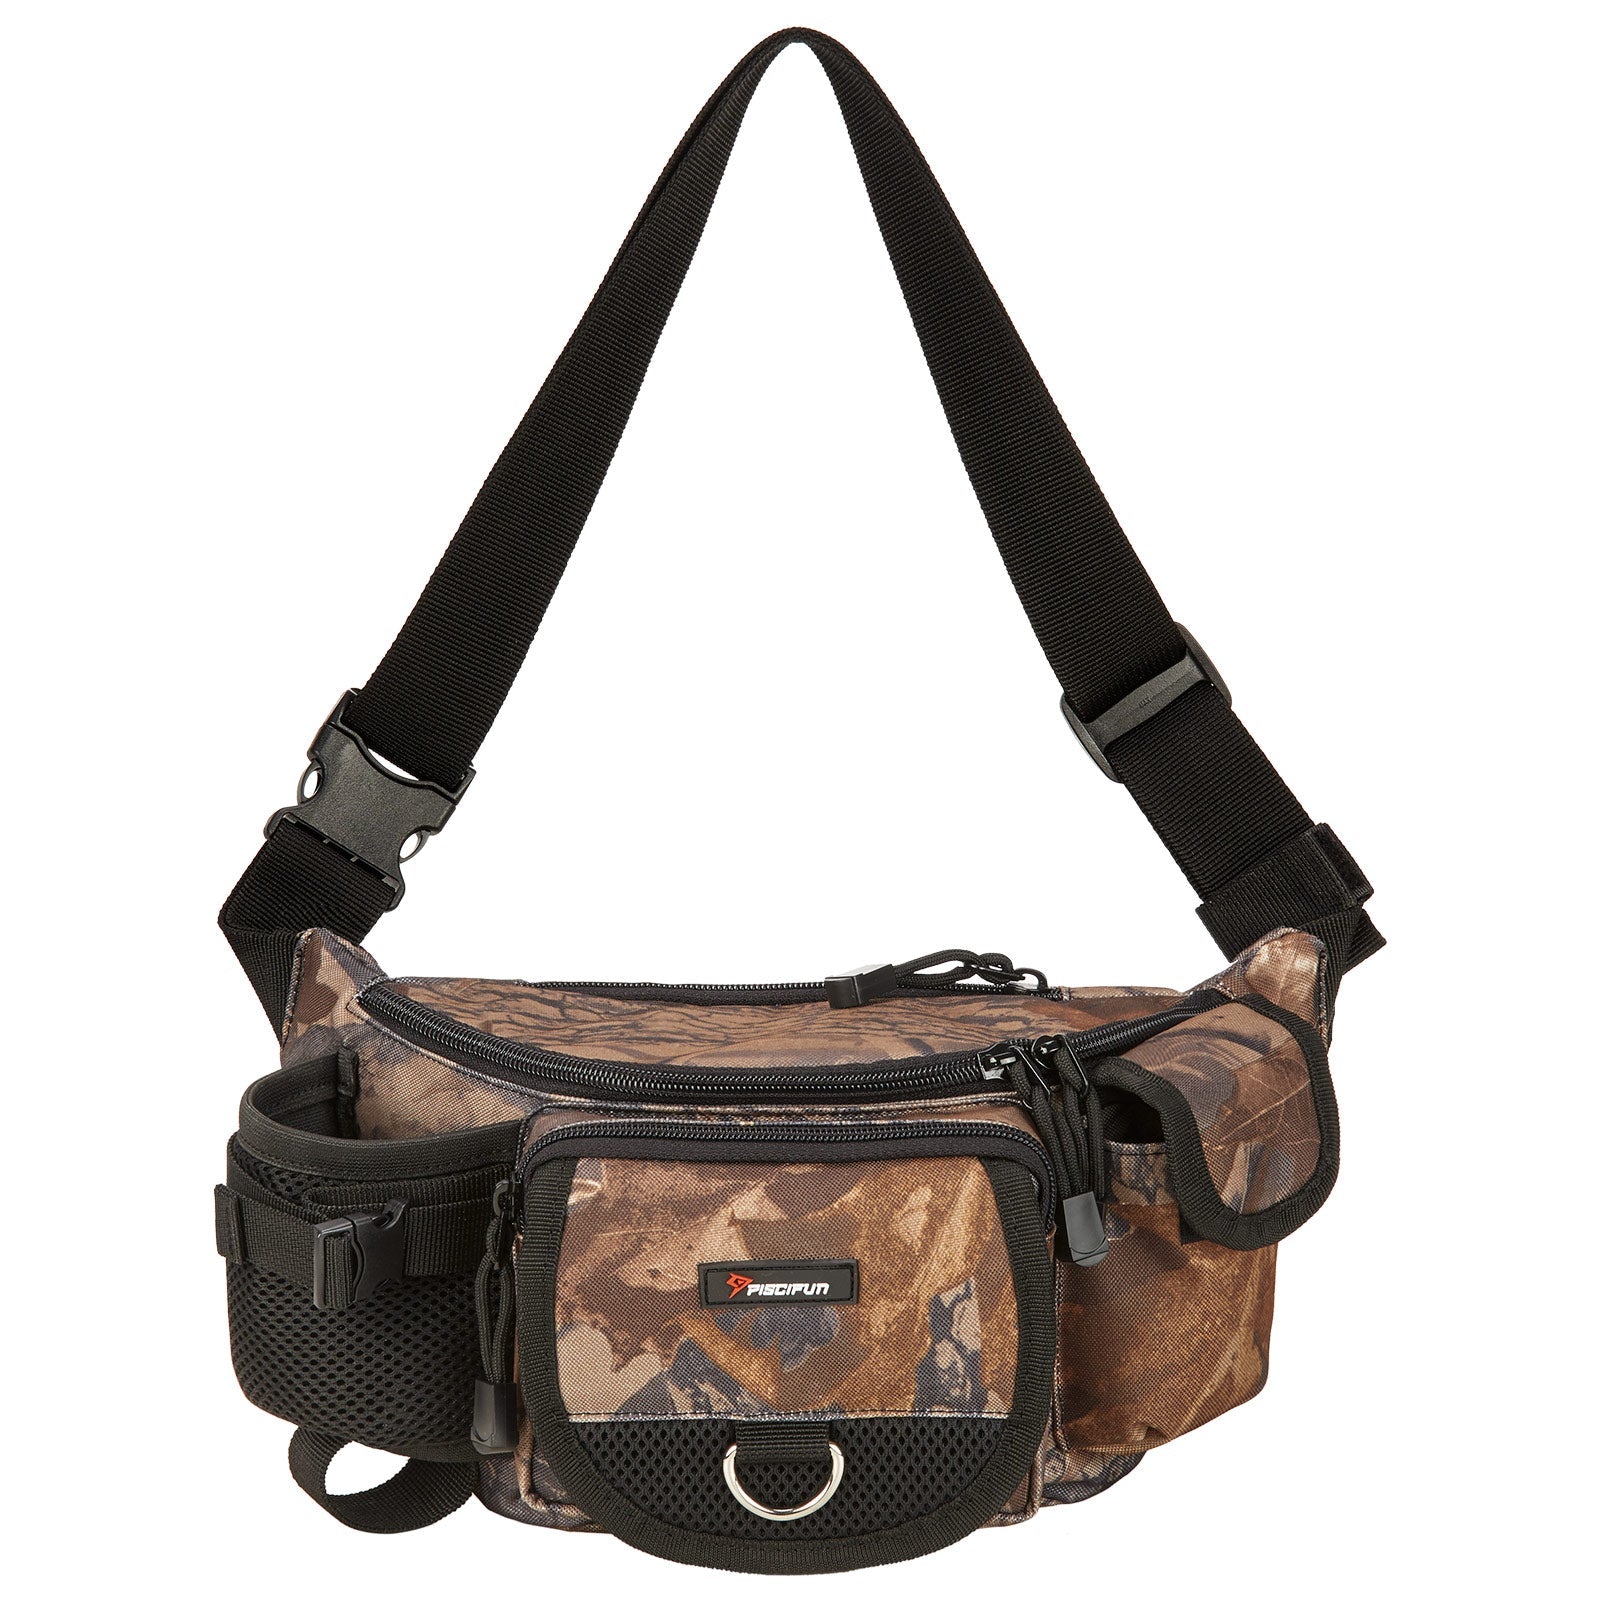 Fishing Waist Pack, Adjustable Portable Fishing Tackle Bag - Piscifun